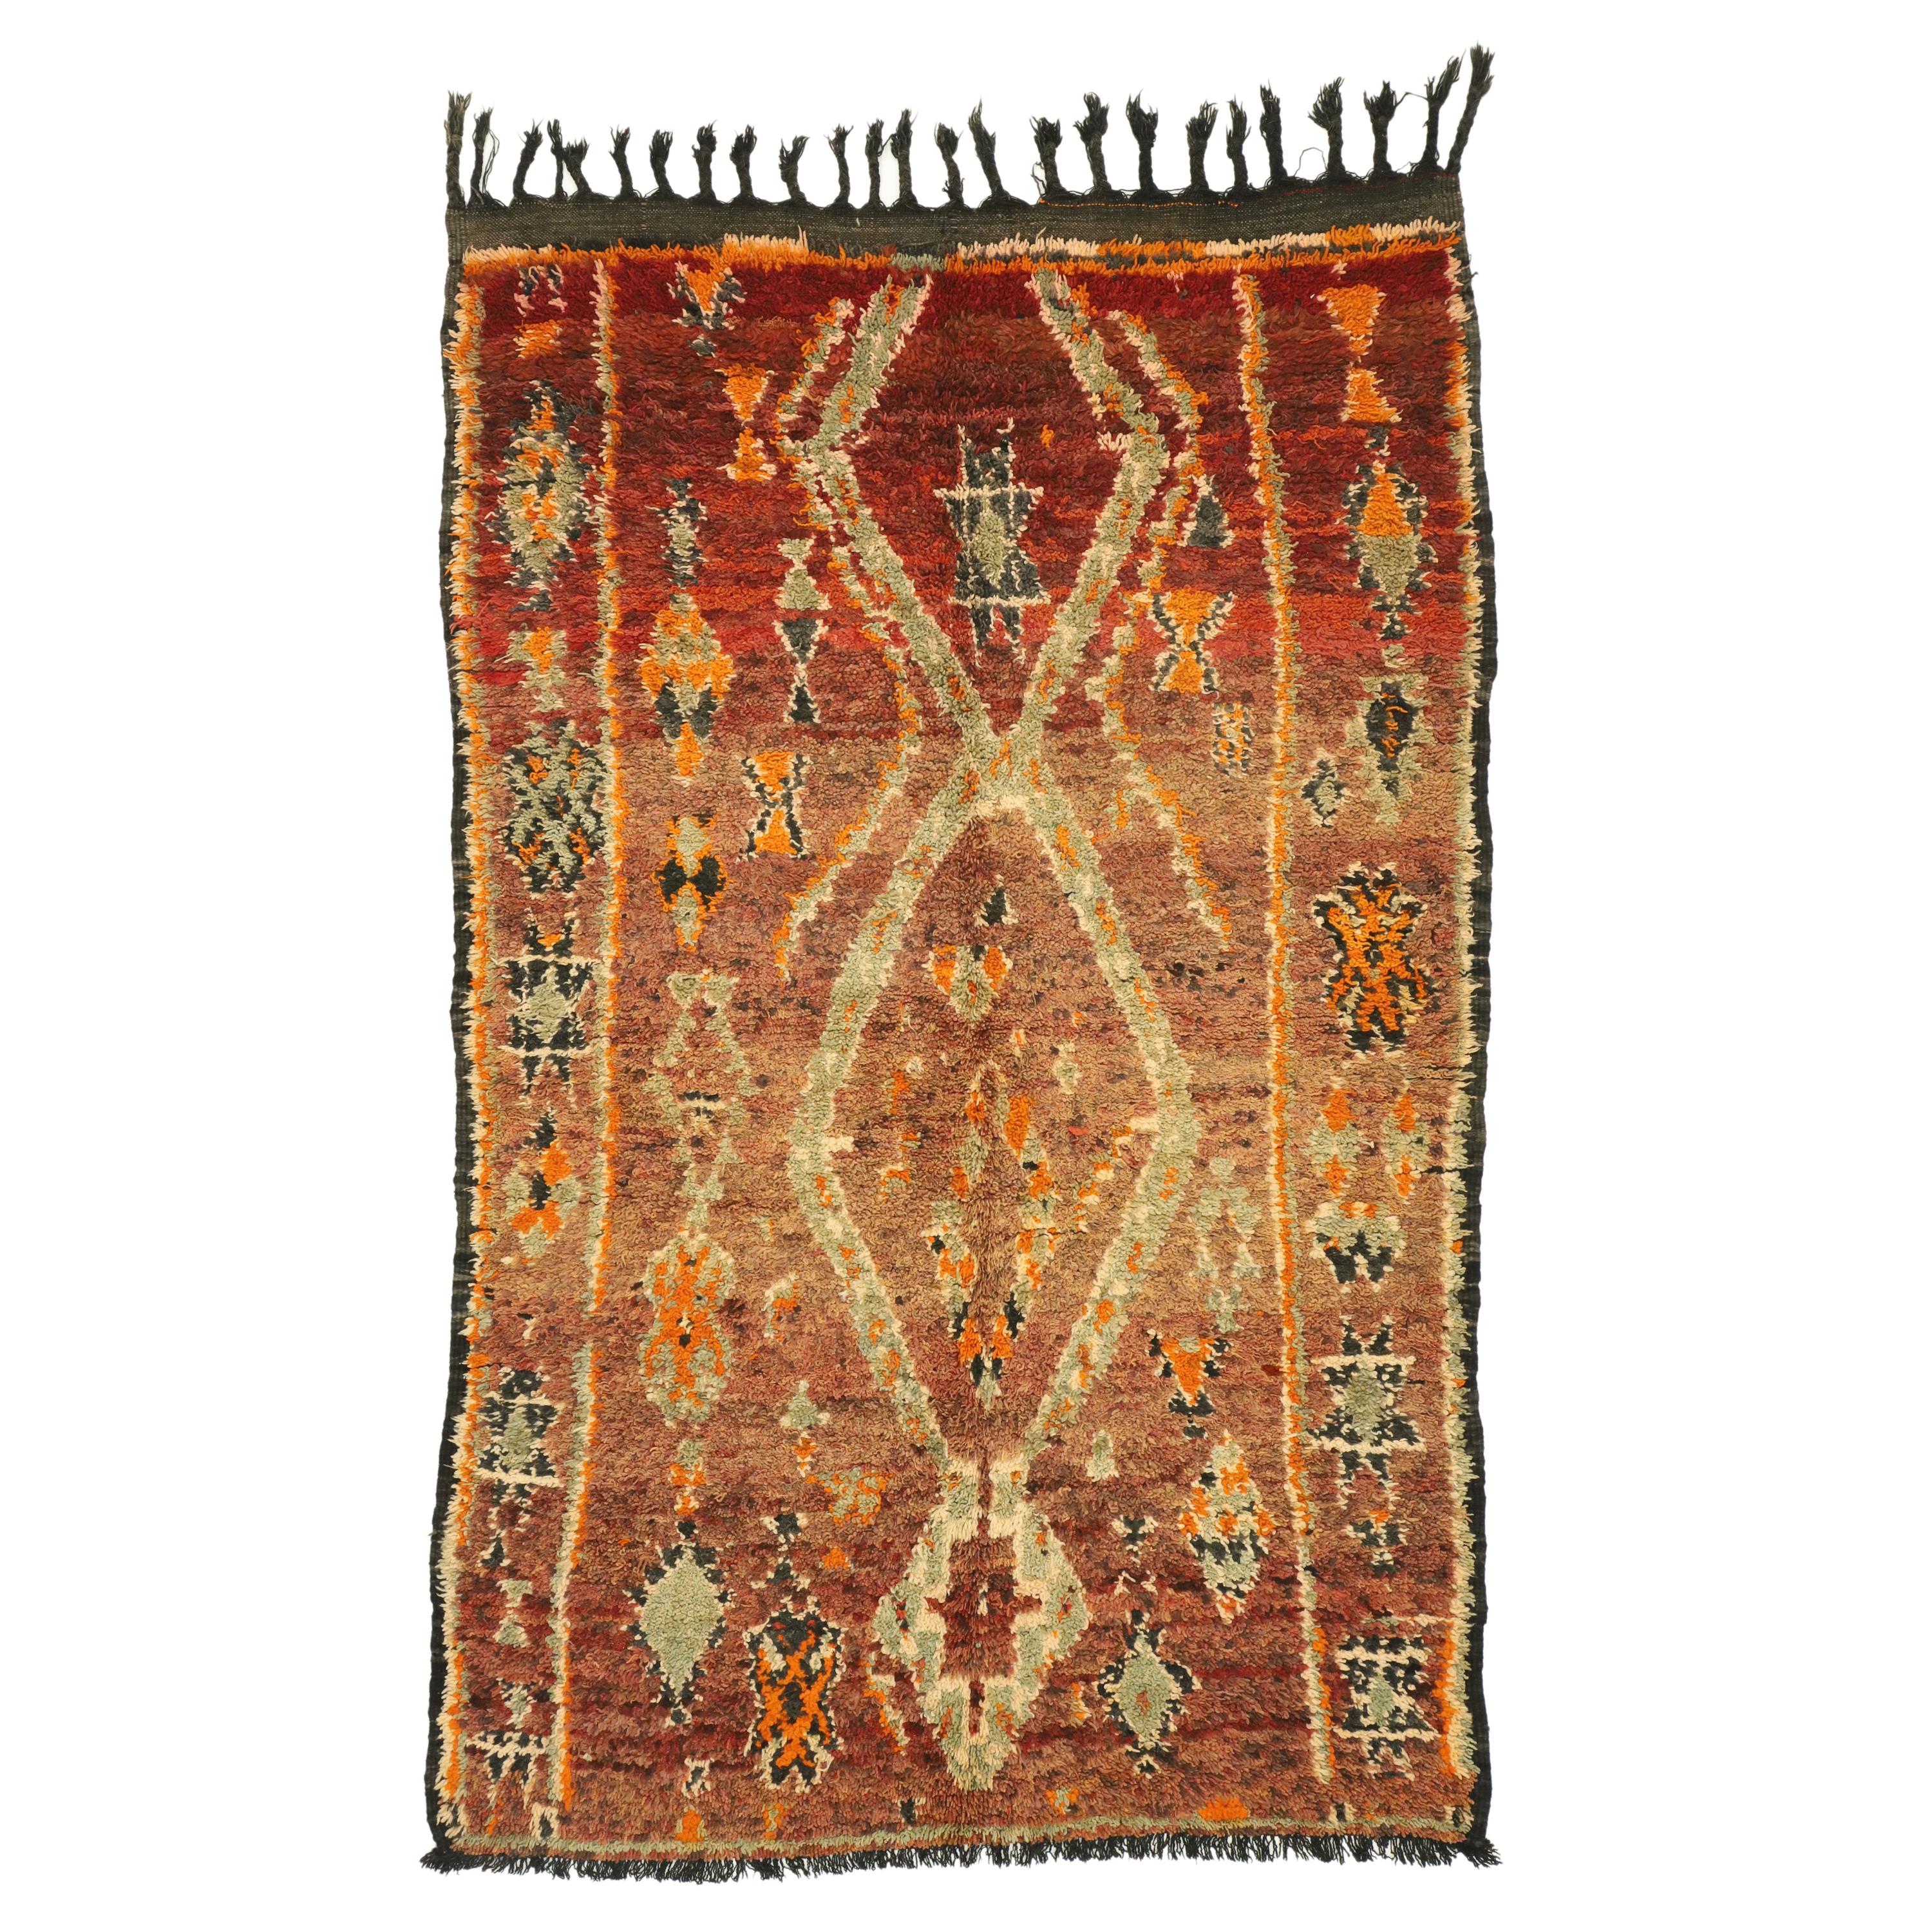 Vintage Beni MGuild Moroccan Rug 